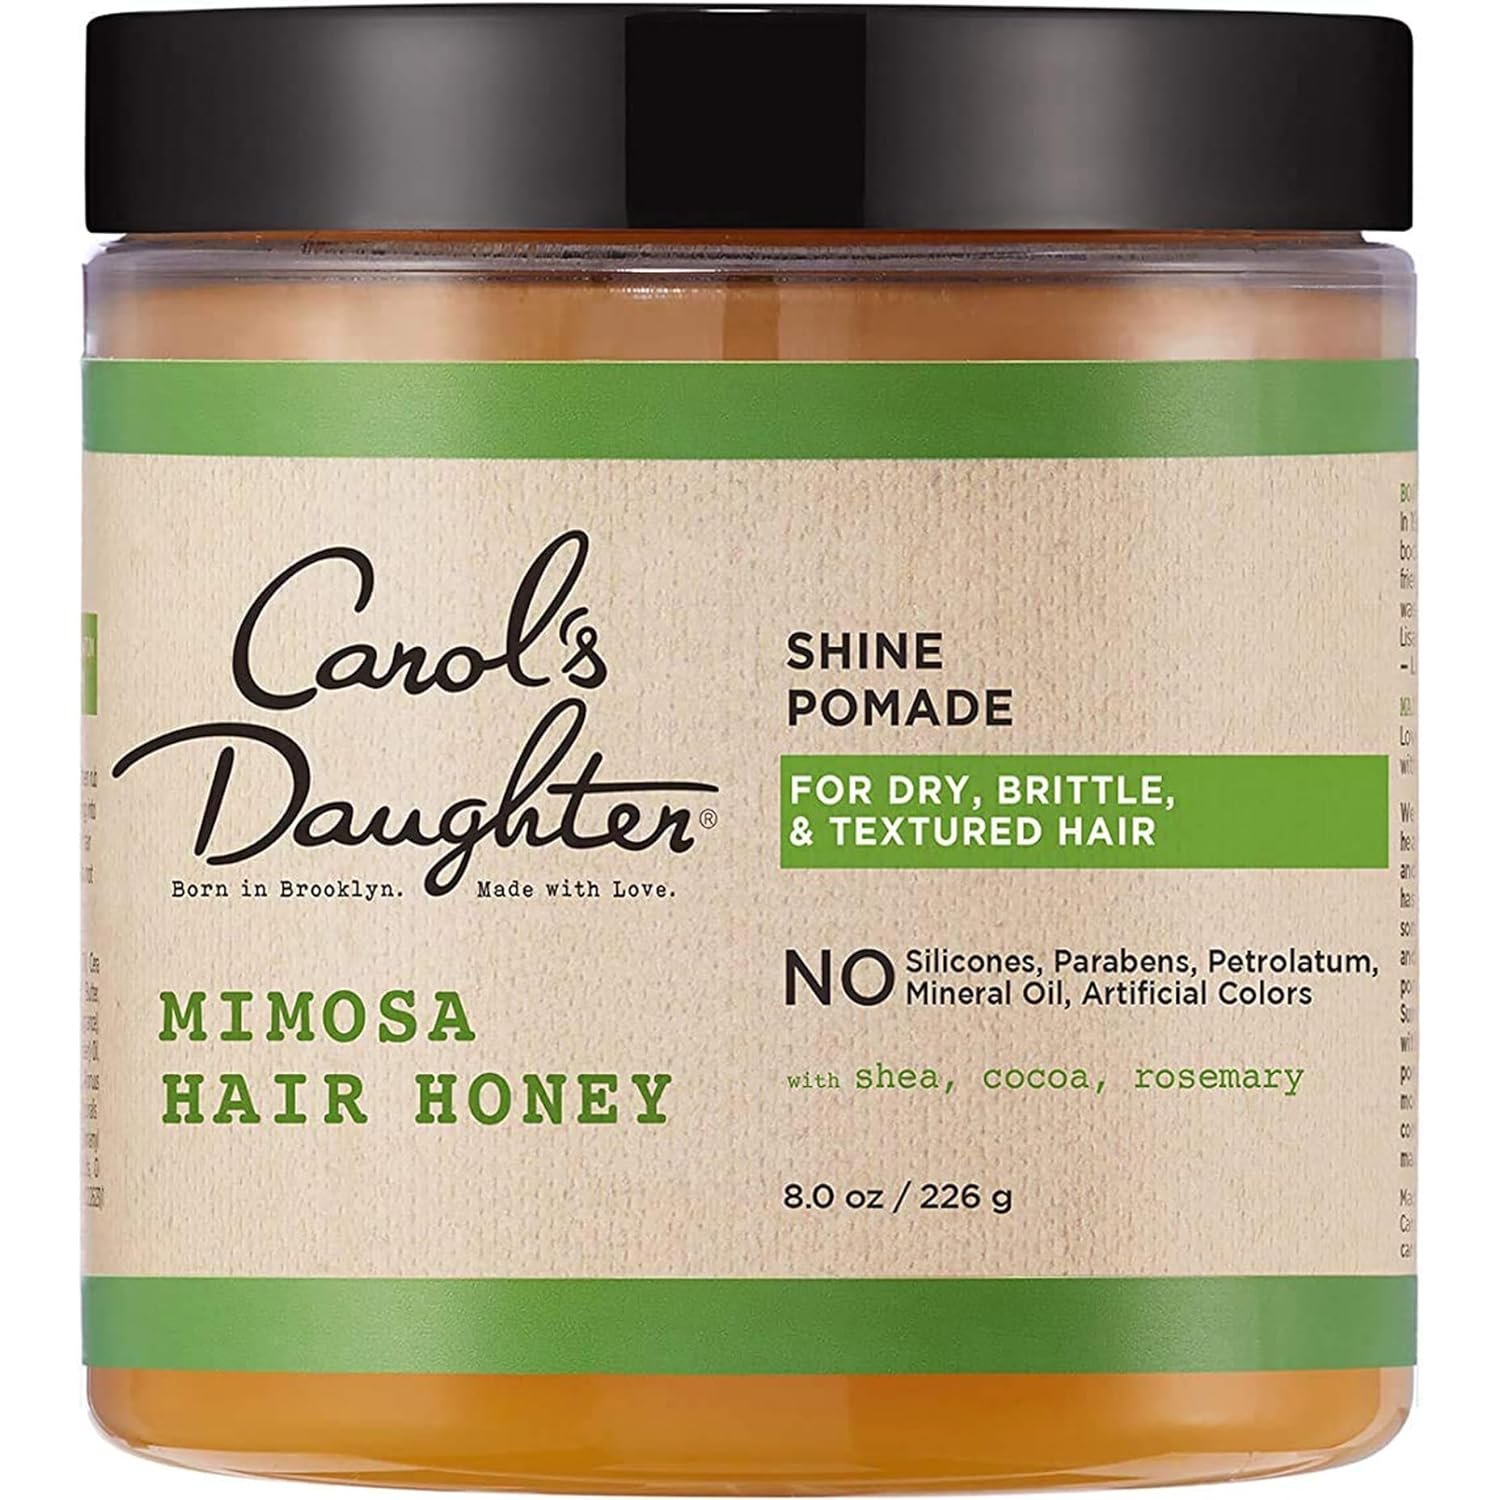 Mimosa Hair Honey Shine Pomade Review